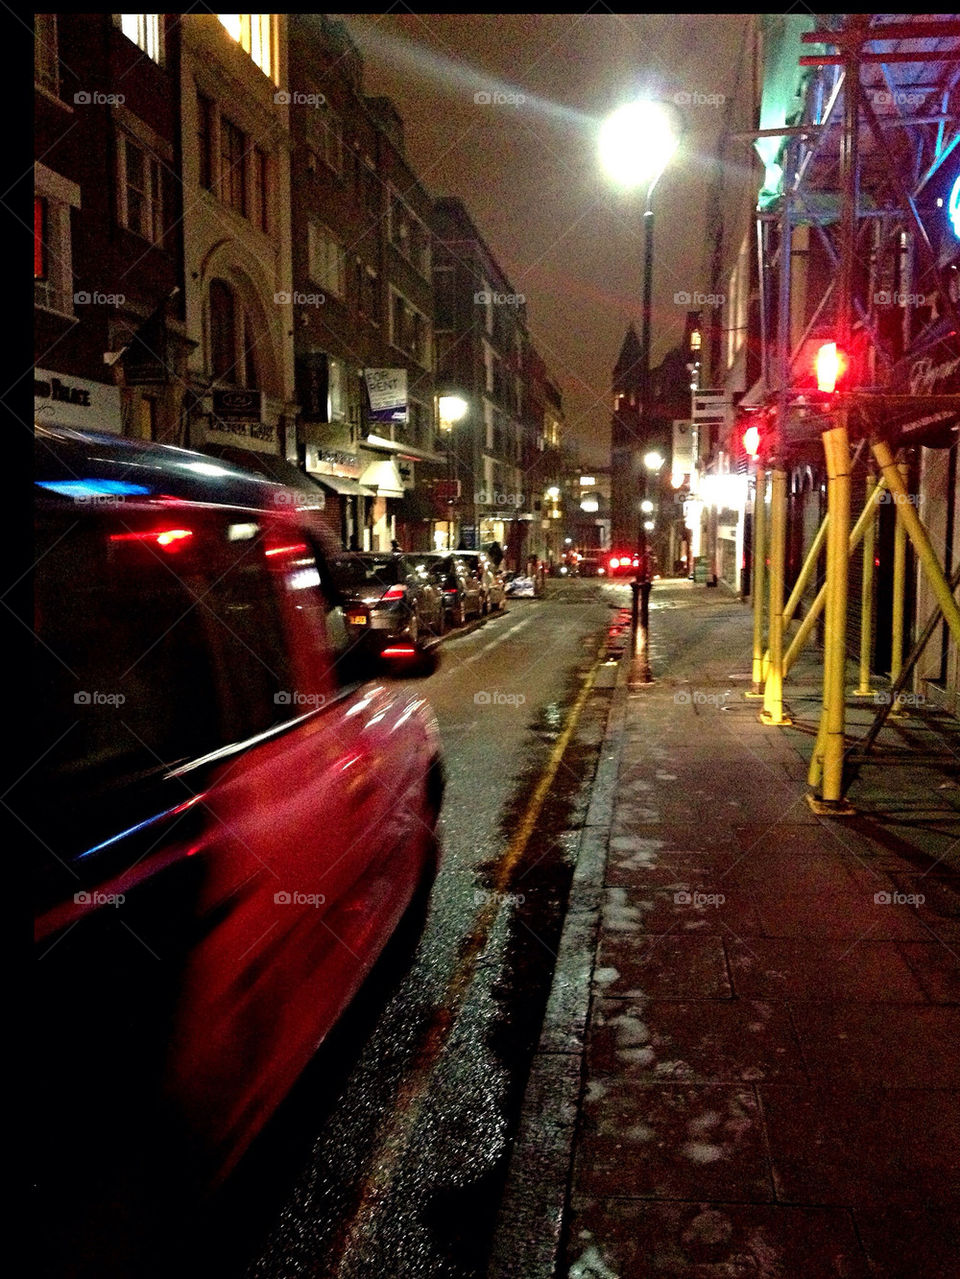 Black cab in late night London.